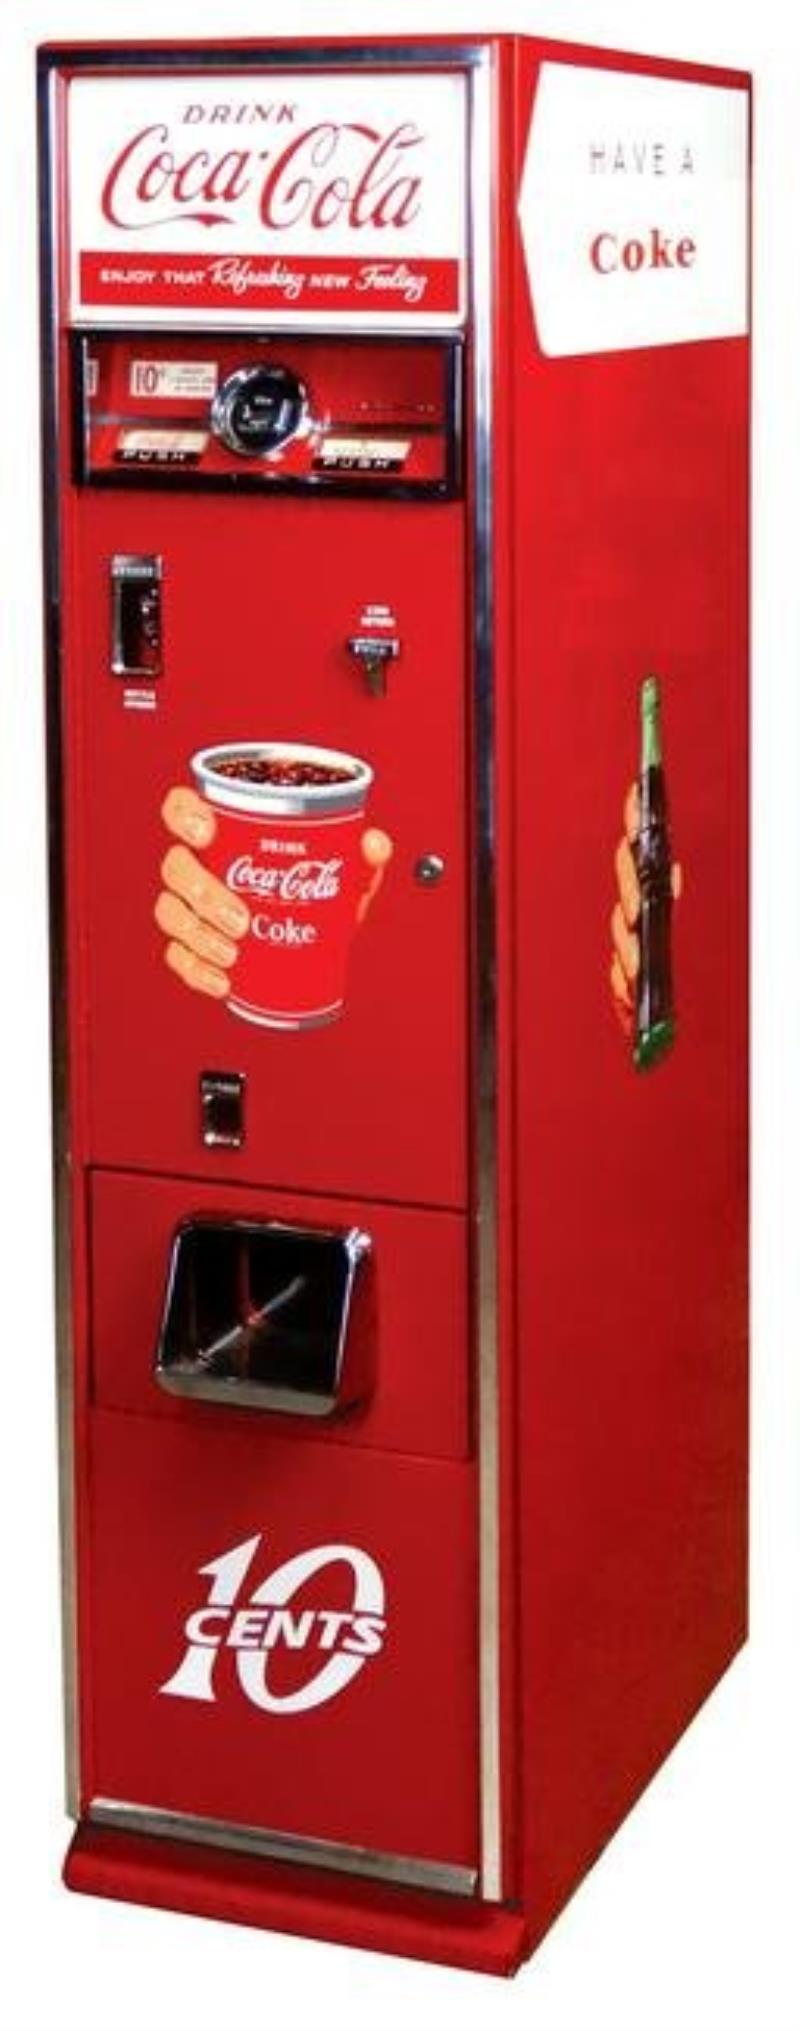 Coca-Cola Coin-Operated Vending Machine, Rare 10 Cent